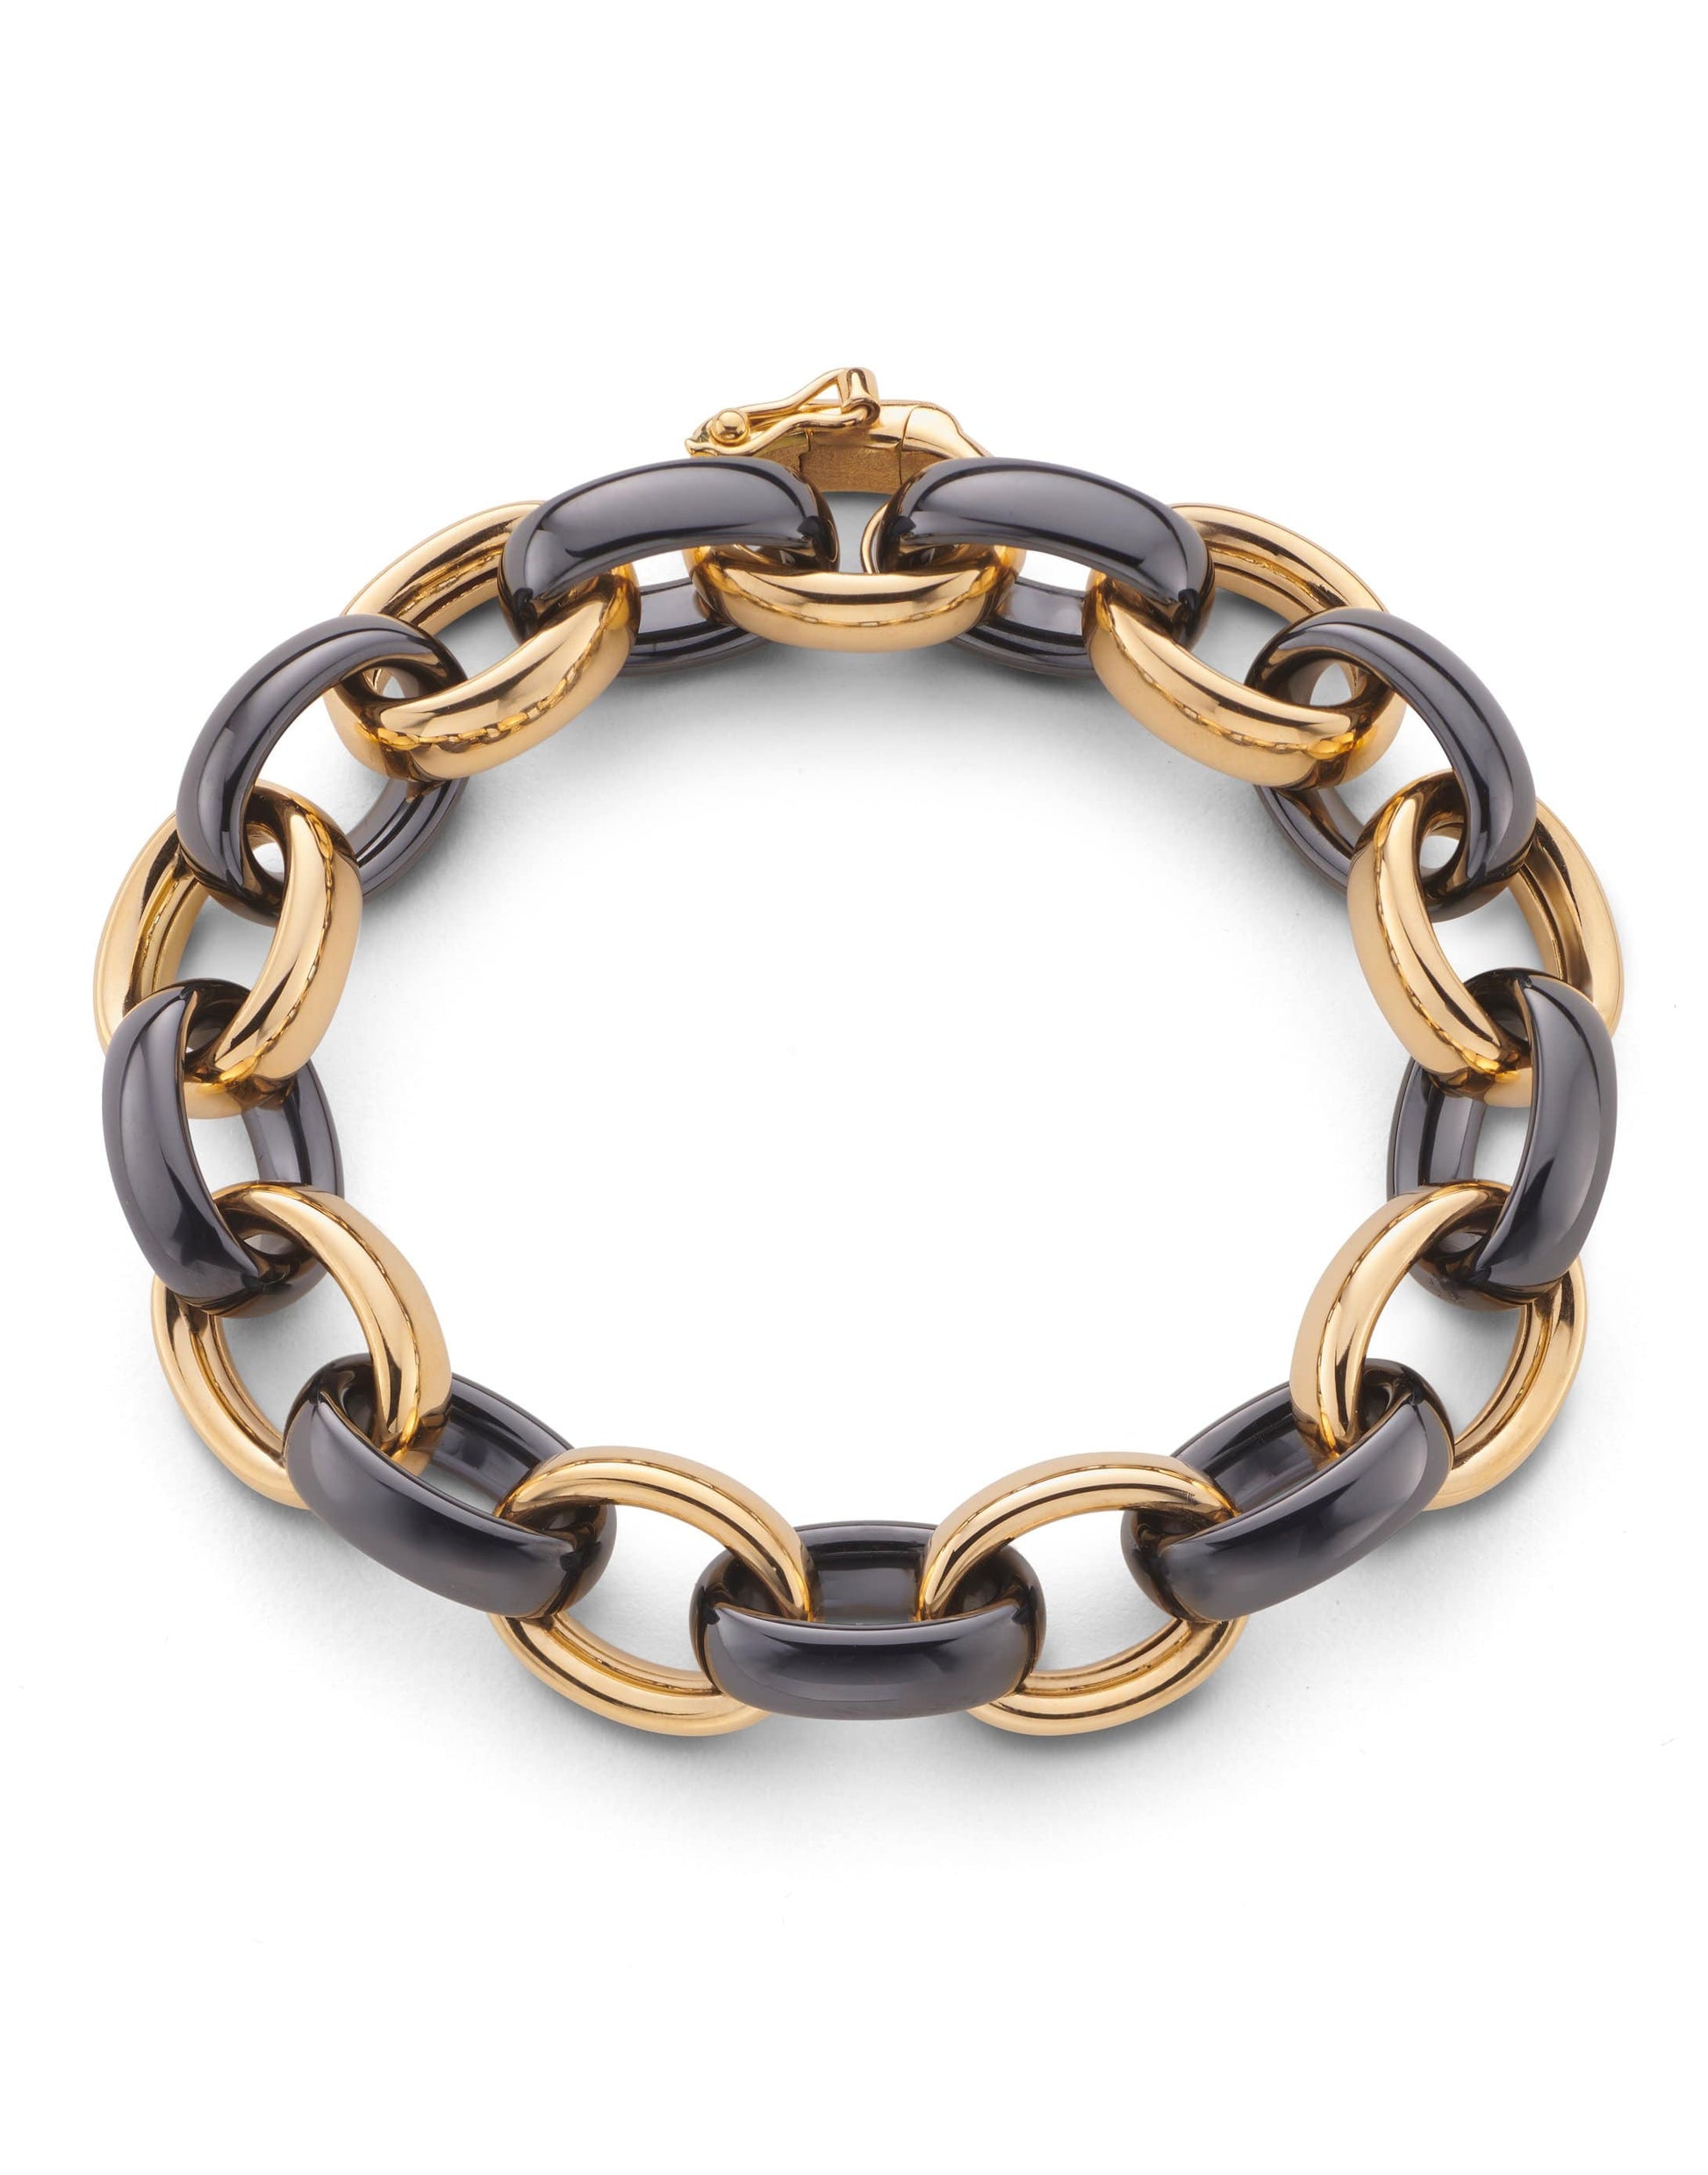 MONICA RICH KOSANN-Marilyn Black Ceramic Link Bracelet-YELLOW GOLD